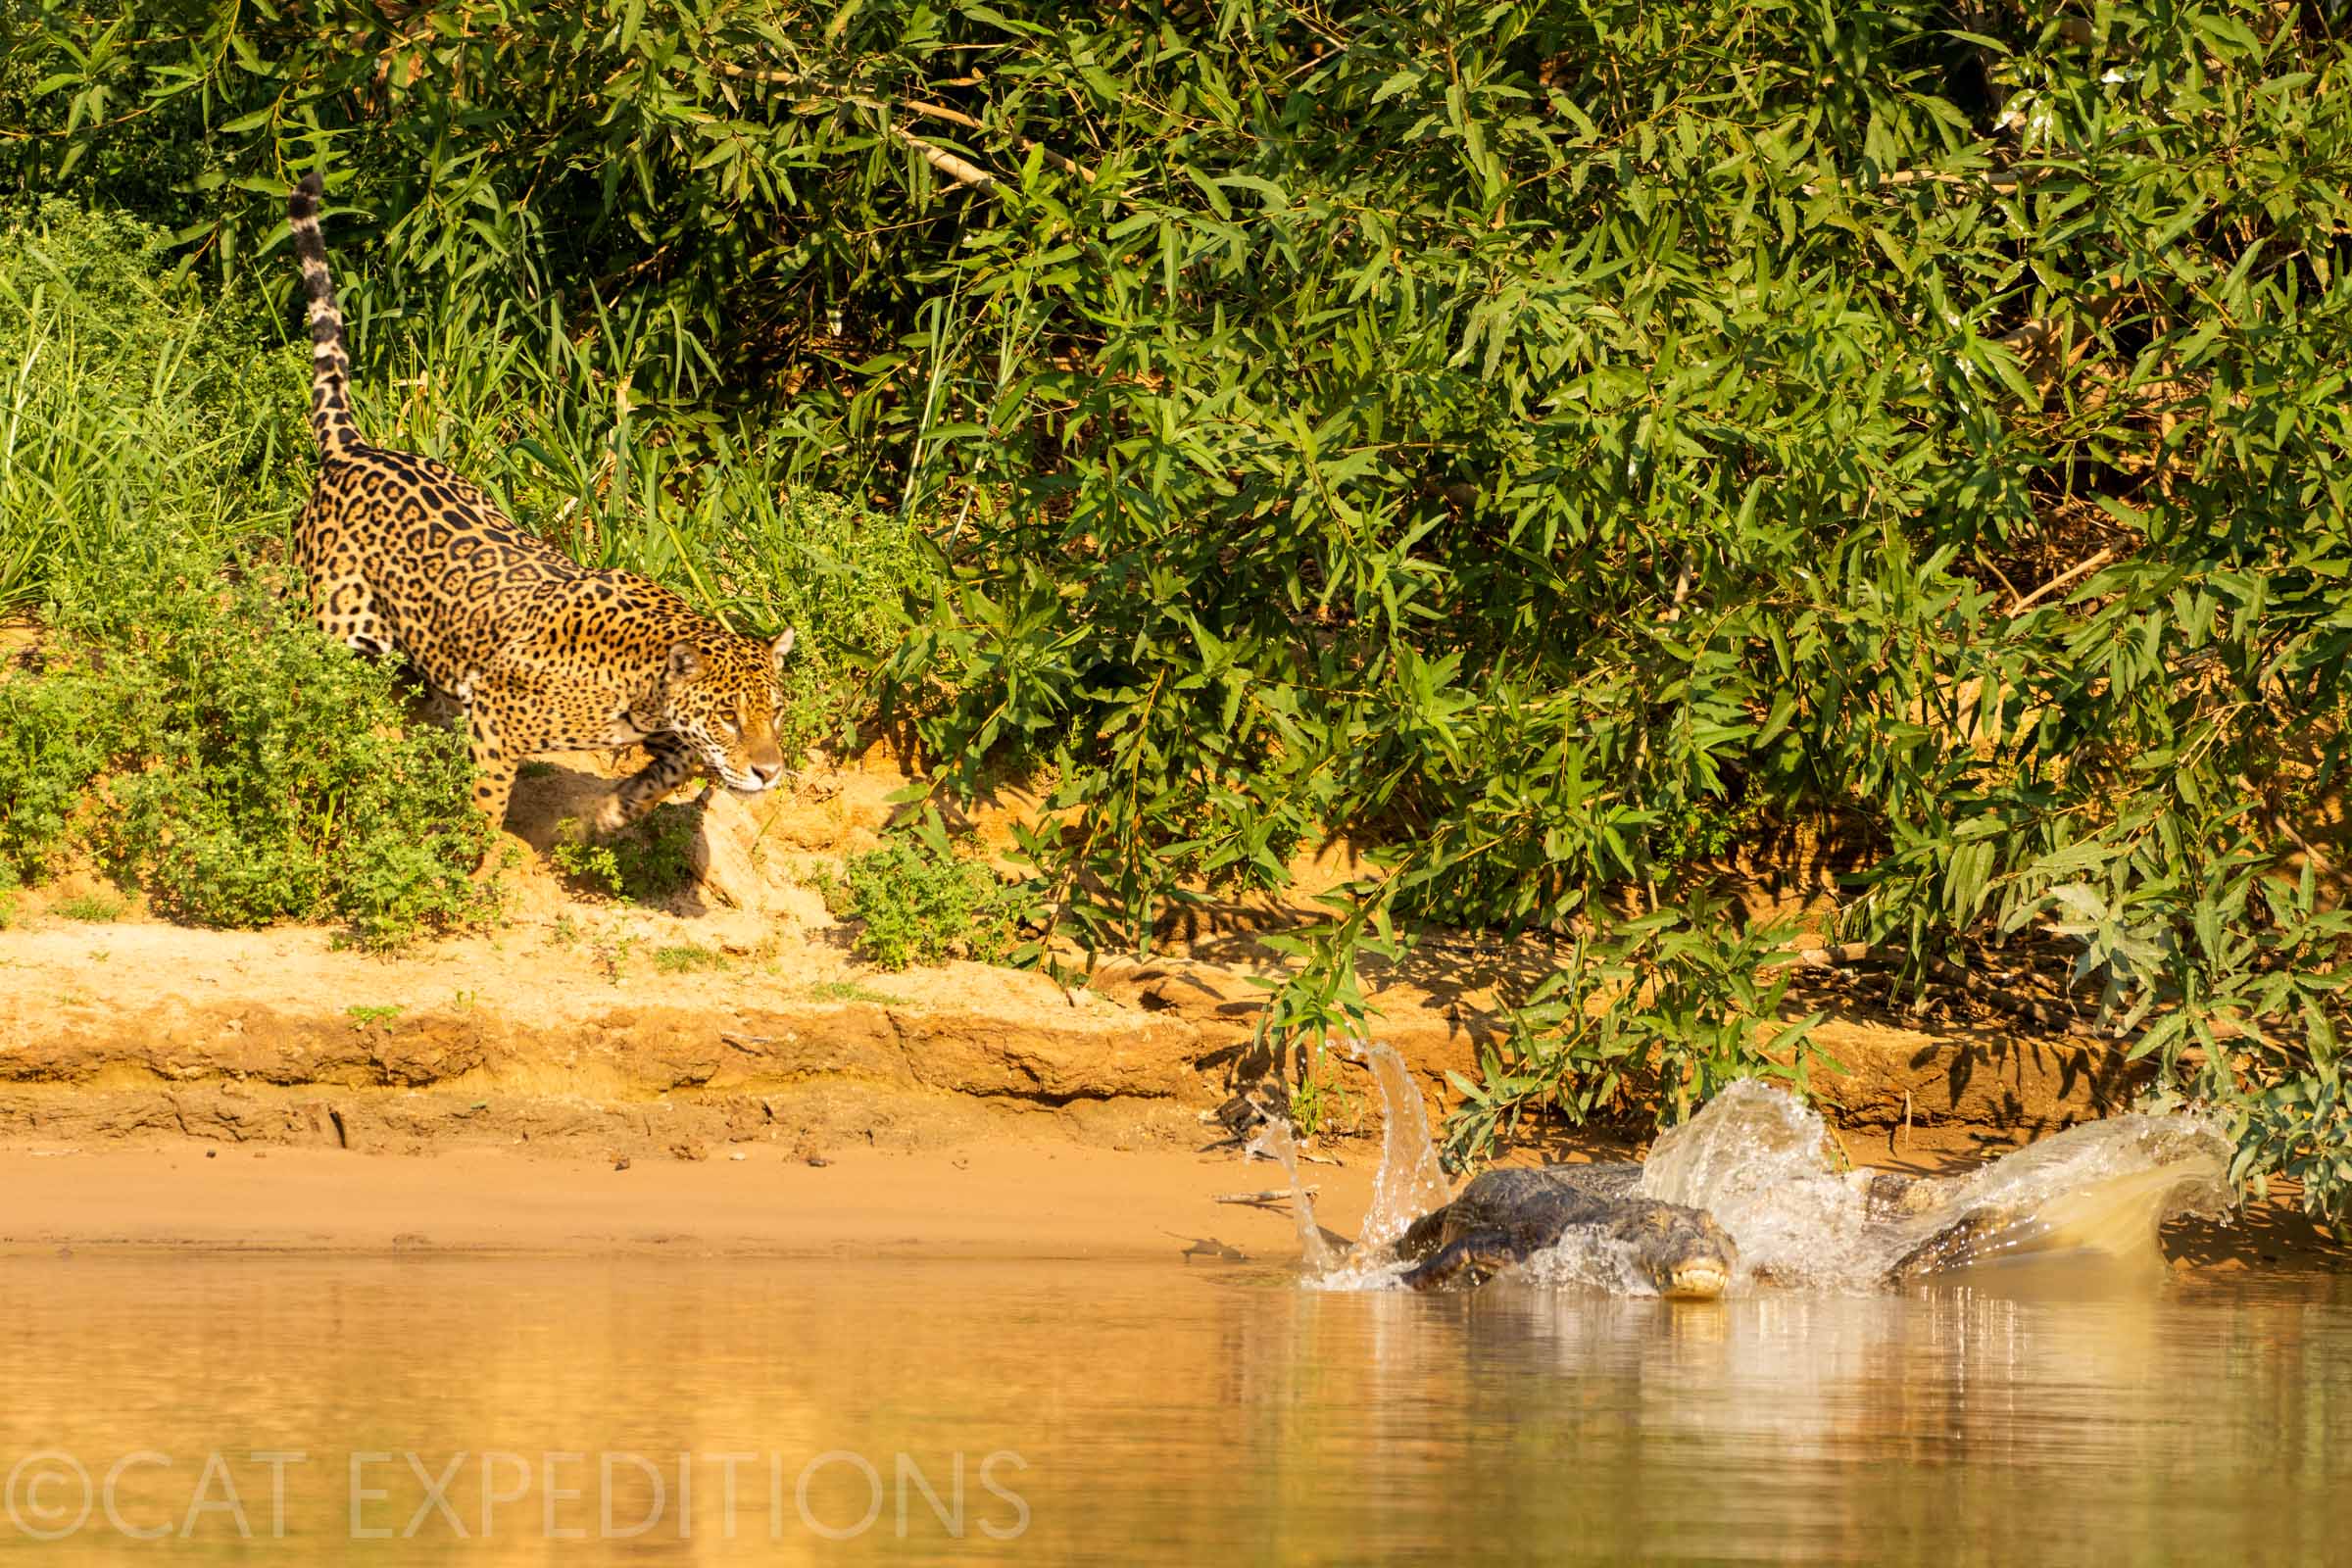 Jaguar hunting a caiman in Brazil